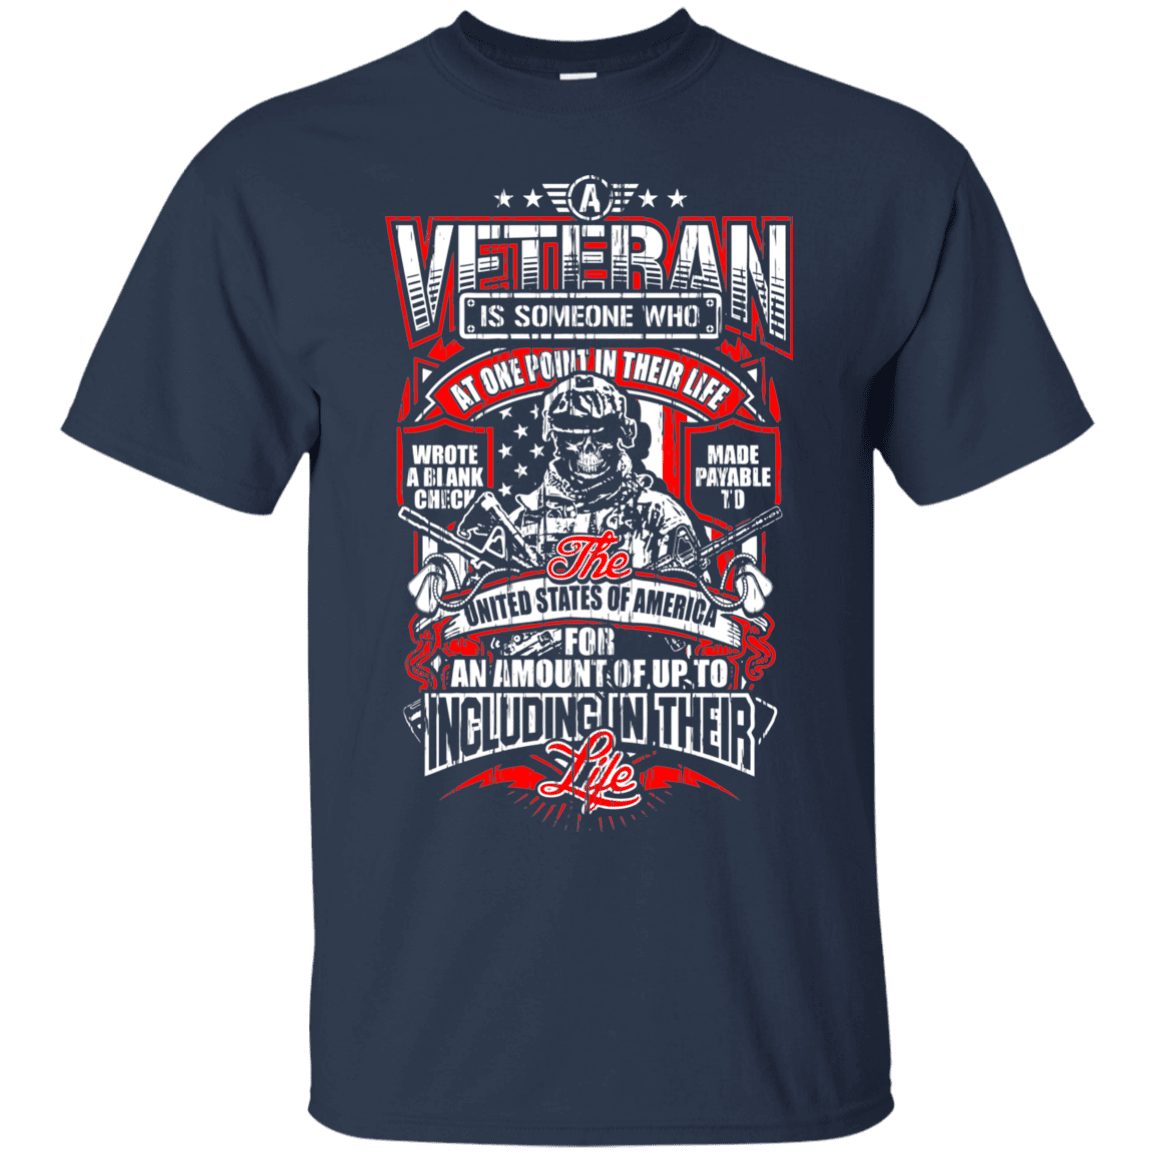 Military T-Shirt "A Veteran Men" Front-TShirt-General-Veterans Nation